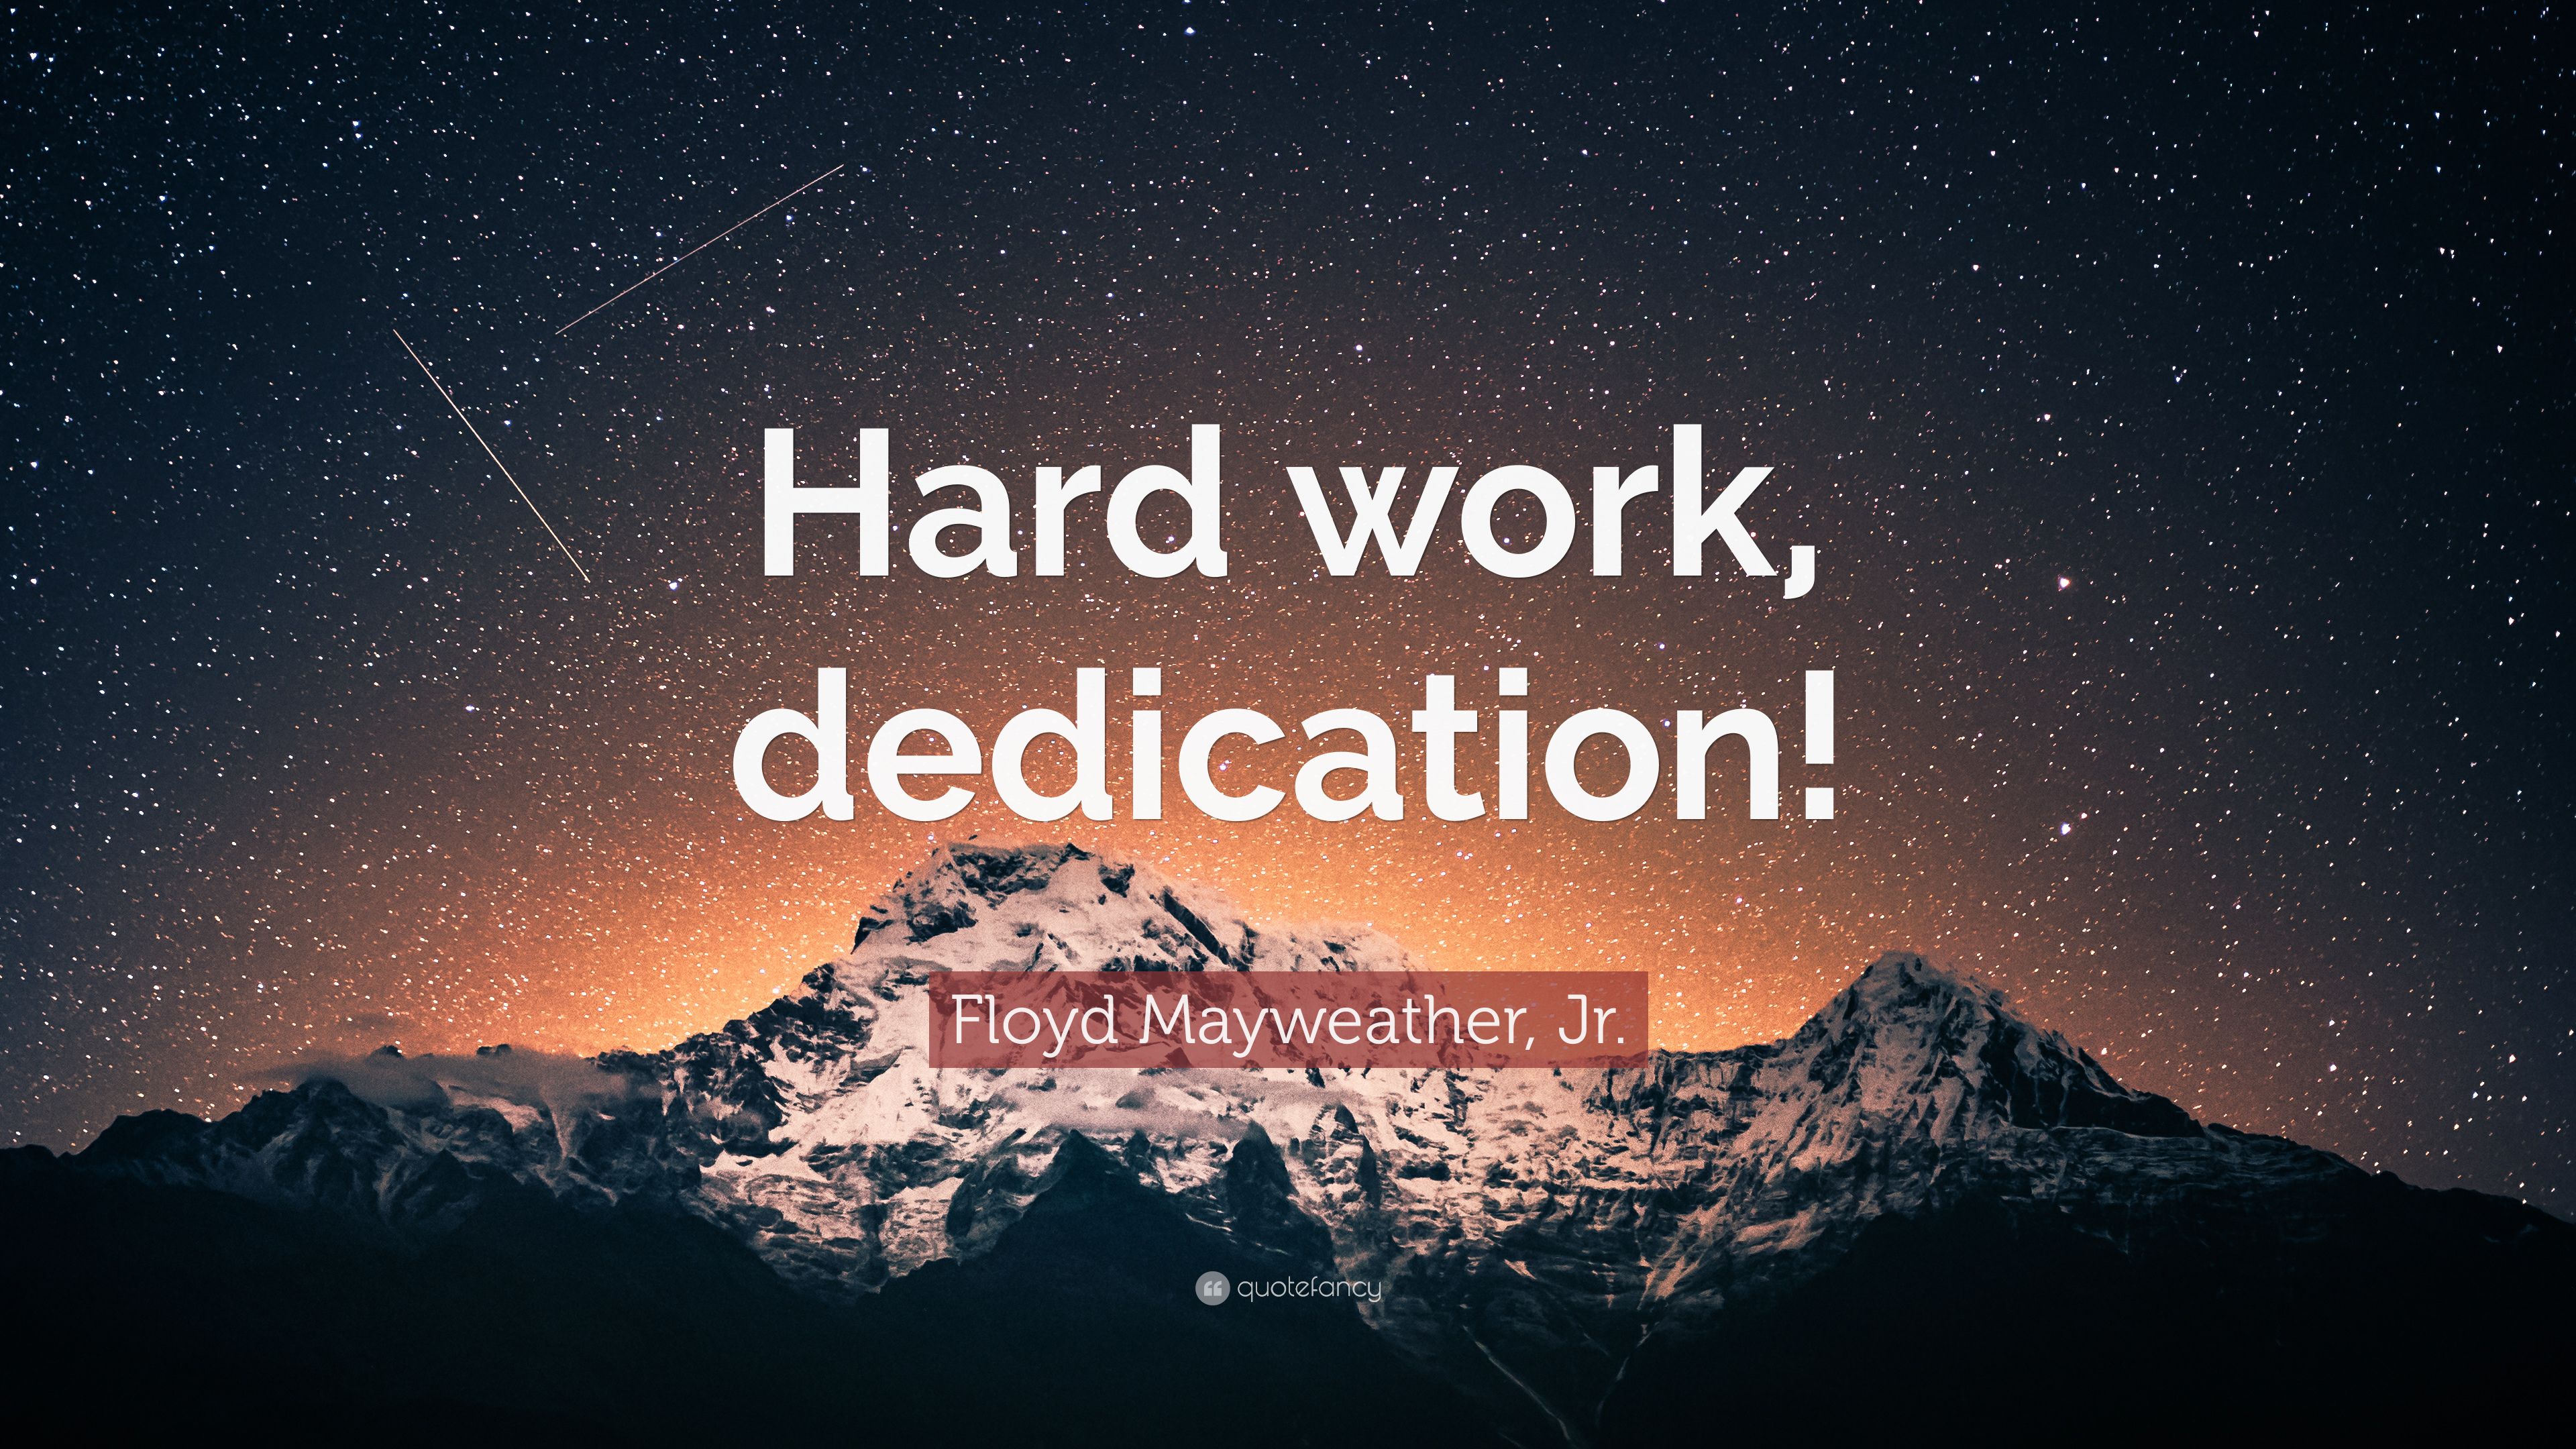 Floyd Mayweather, Jr. Quote: “Hard work, dedication!” 12